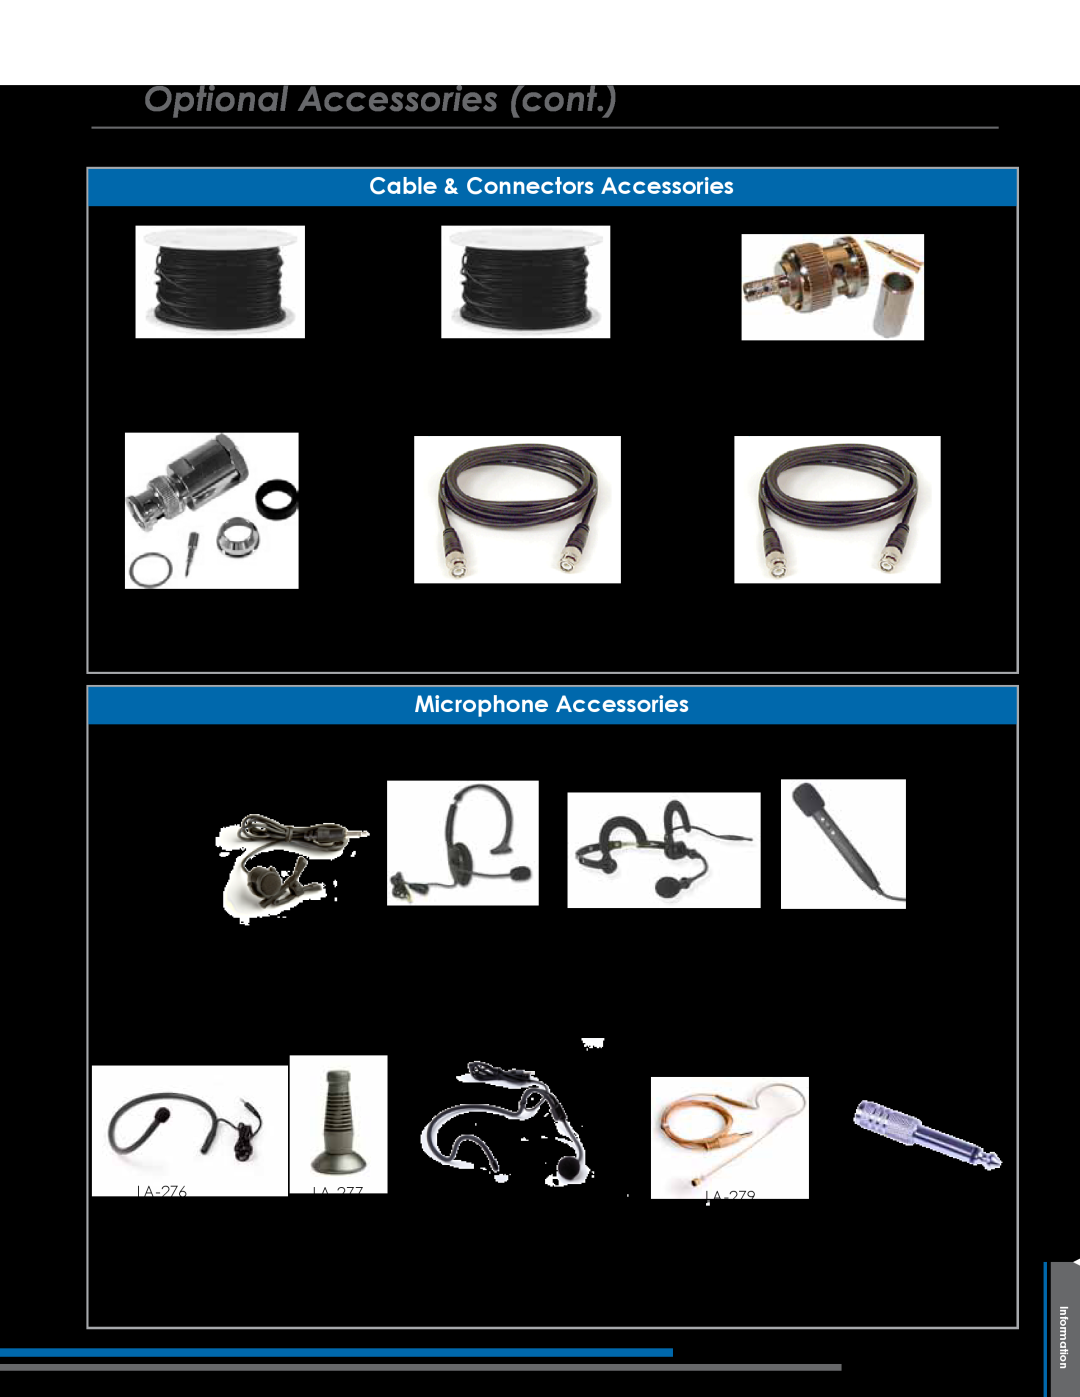 Listen Technologies LT-800-072 manual Optional Accessories cont, Cable & Connectors Accessories, Microphone Accessories 